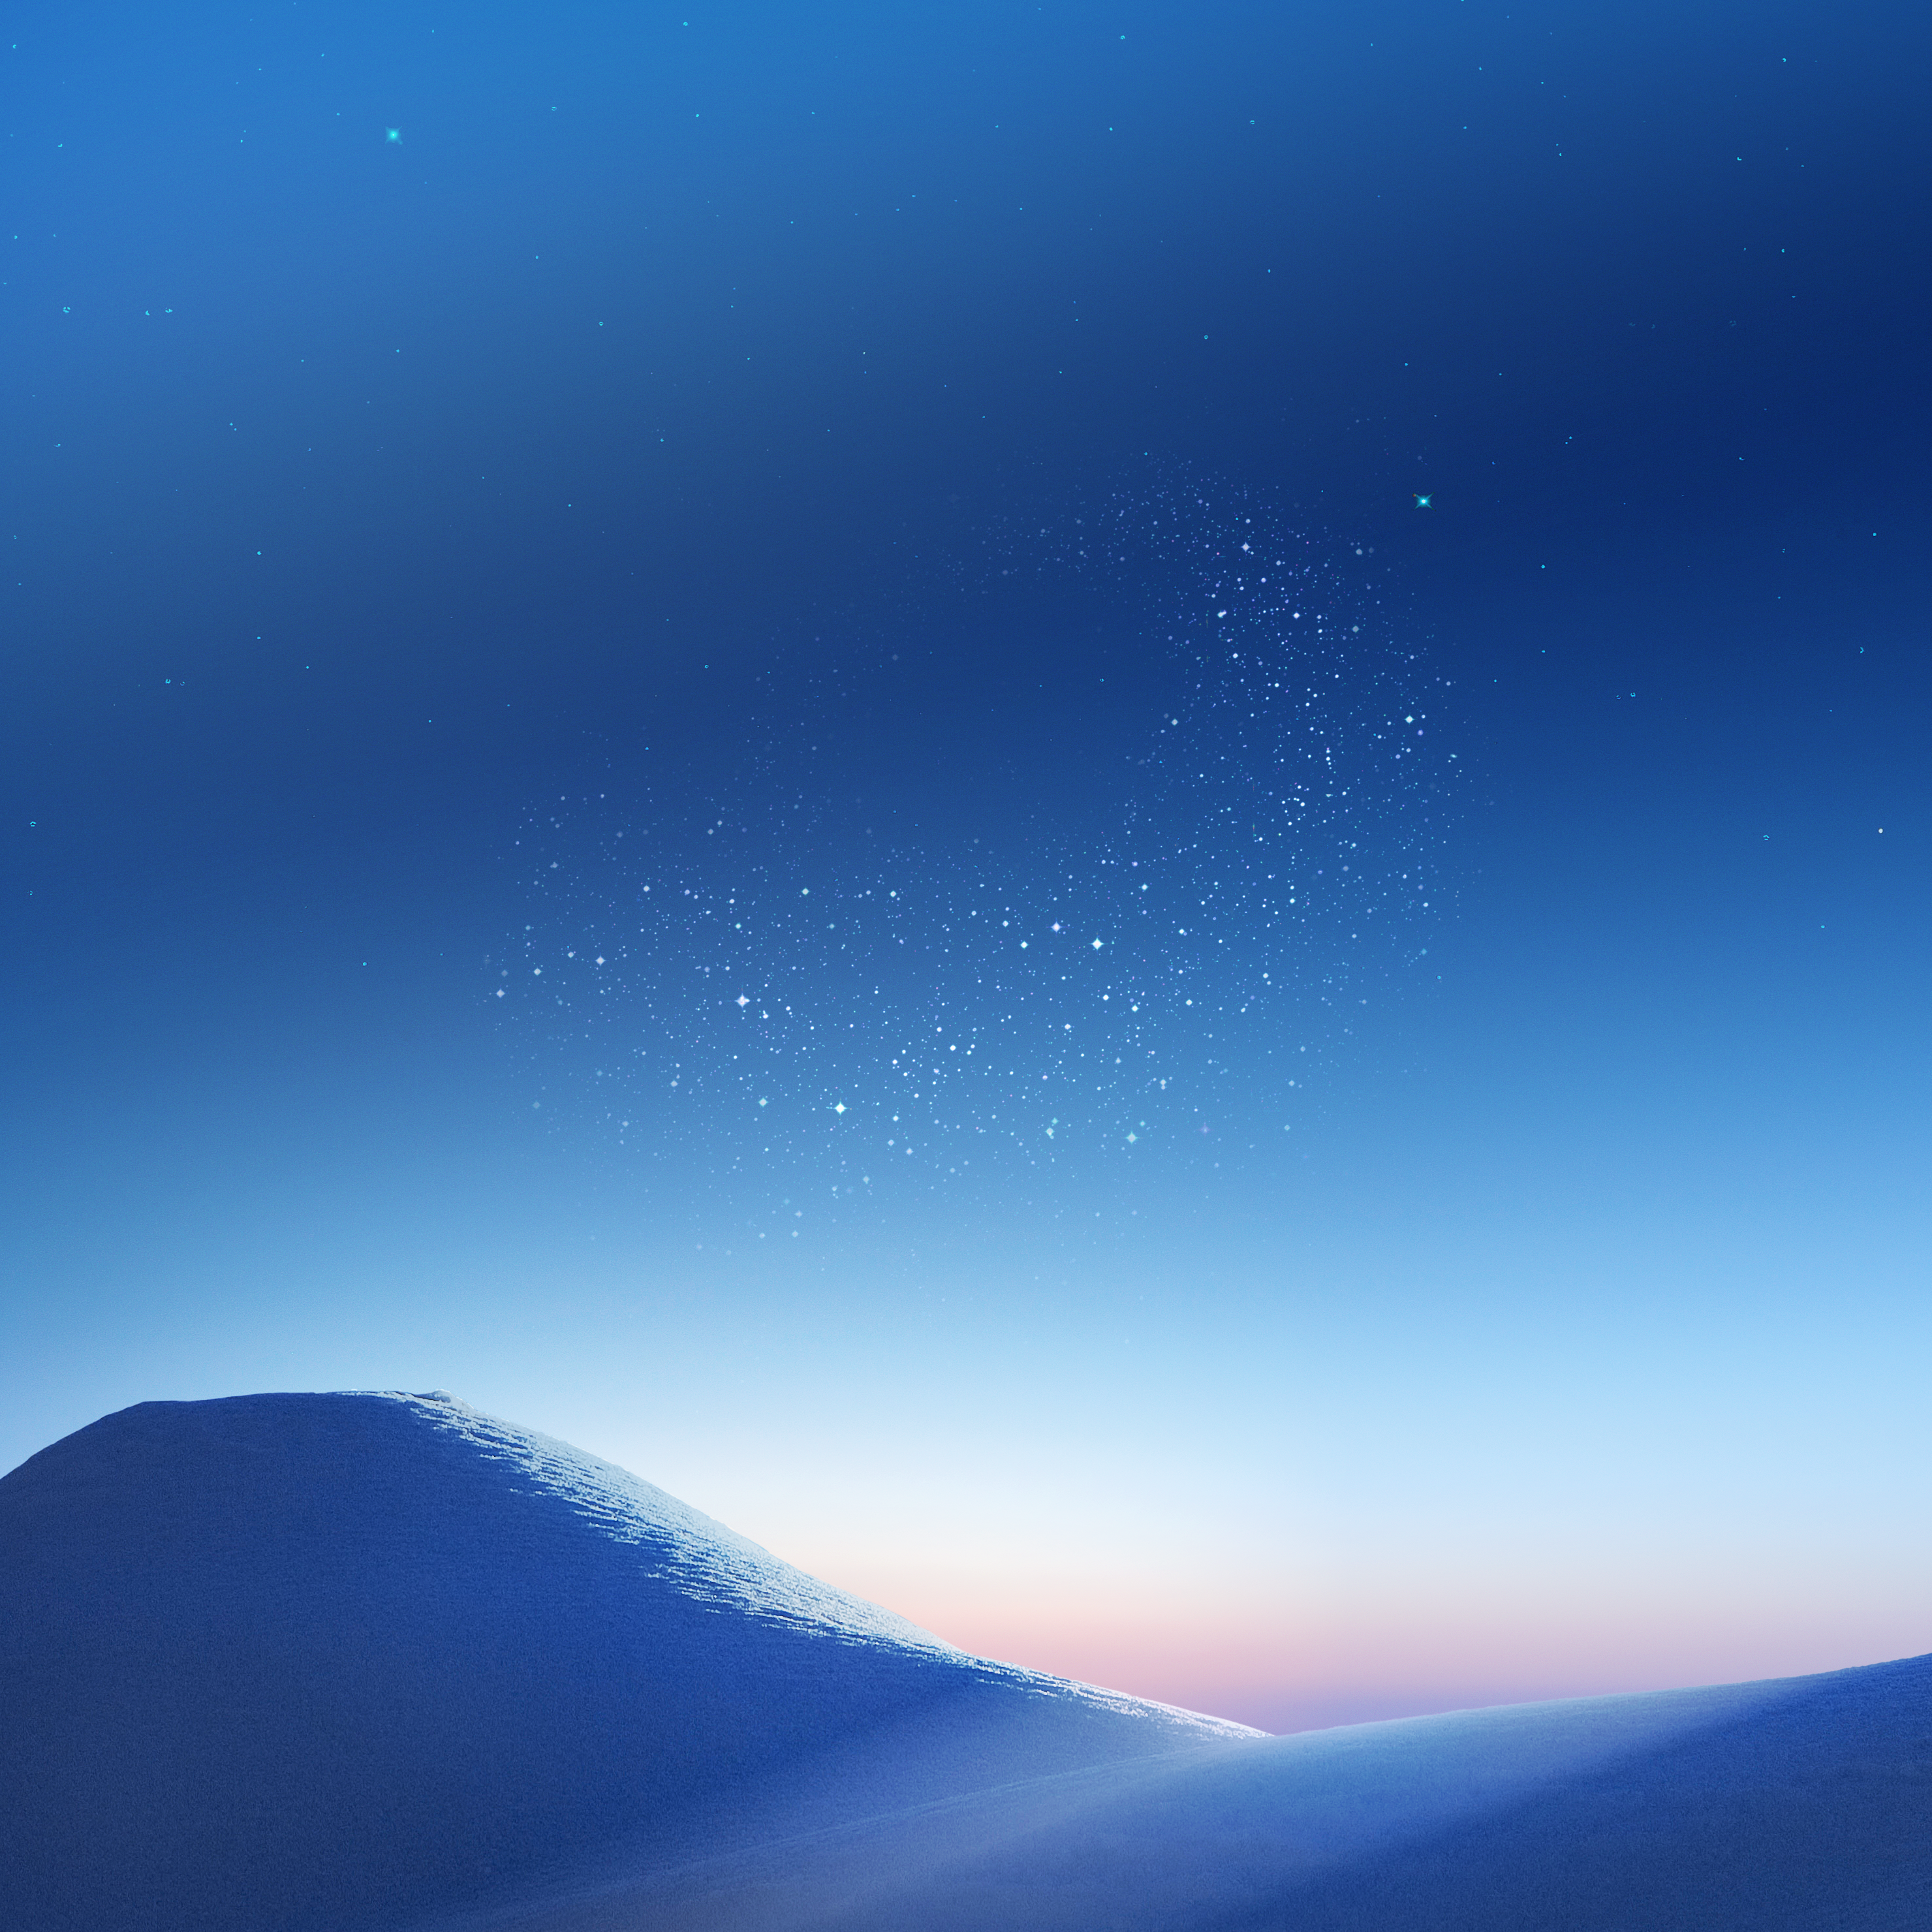 samsung galaxy s8 wallpaper,sky,blue,atmosphere,horizon,daytime